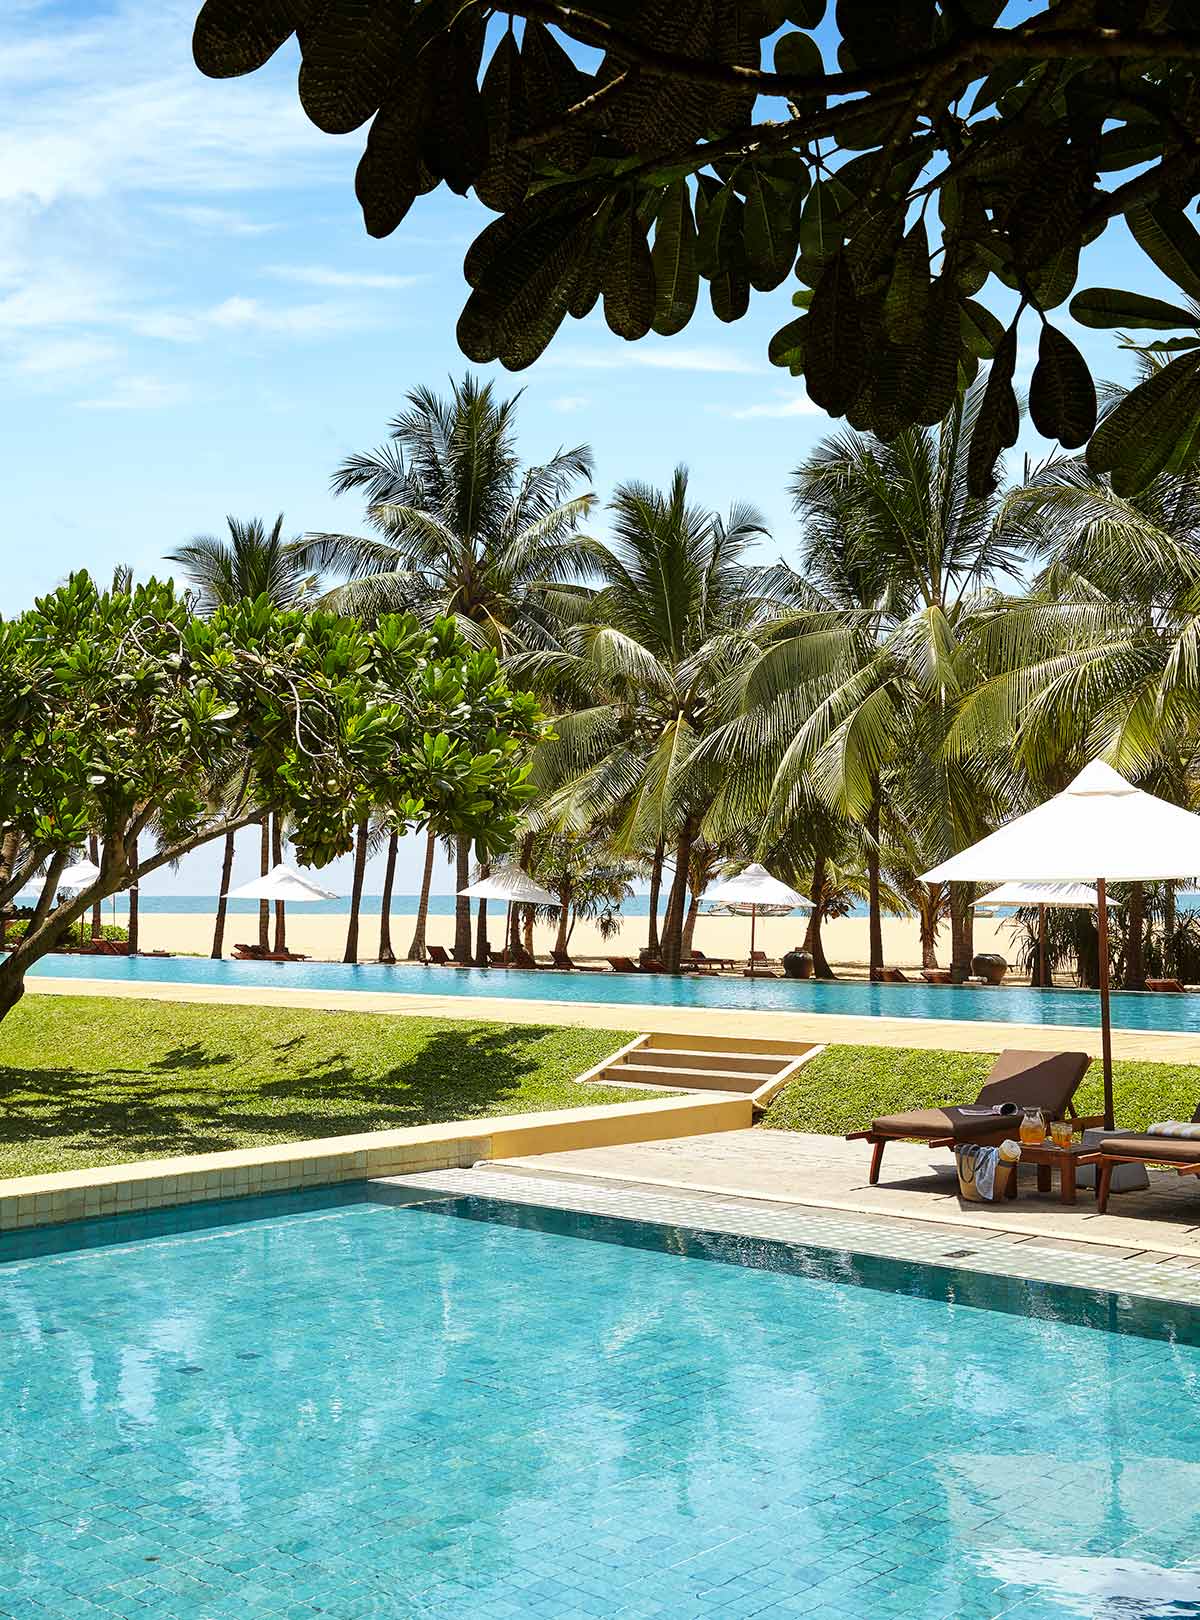 Jetwing Beach Hotel - luxury pool overlooking Negombo, Sri Lanka